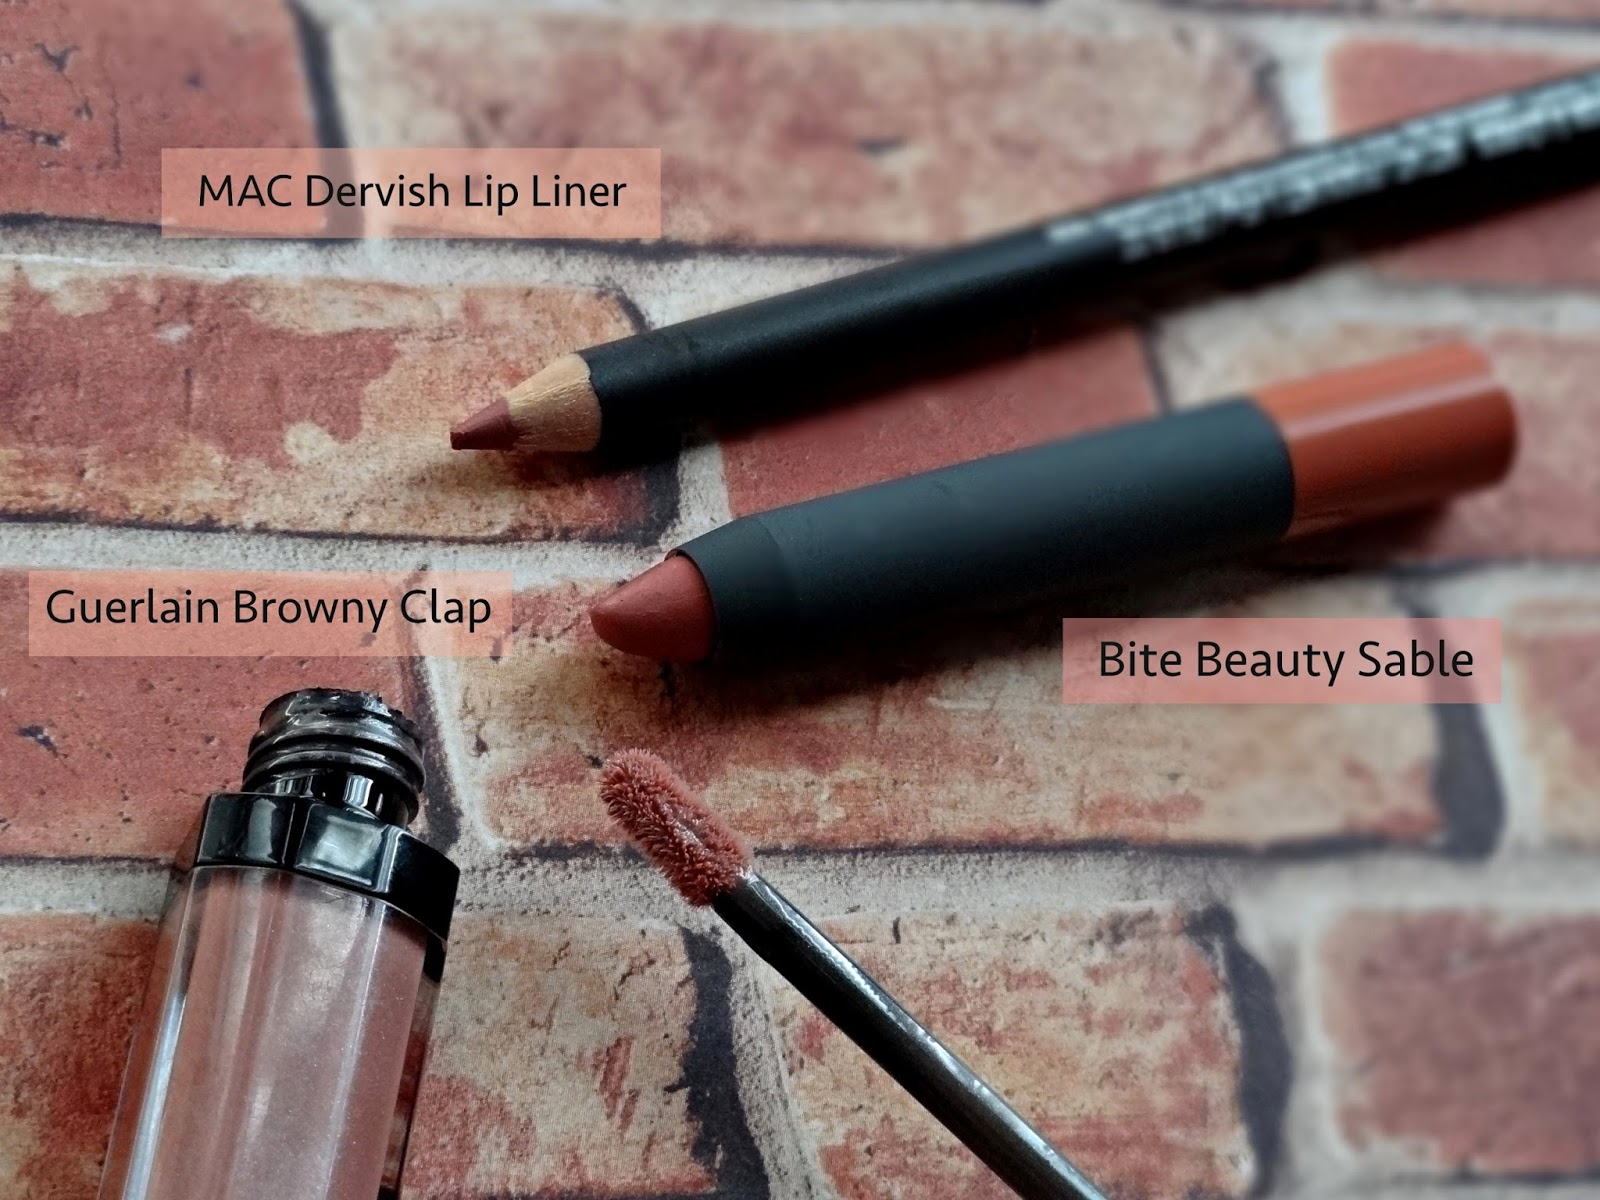 Nude Lips for Medium Dark Skintones - MAC Dervish Lip Liner, Bite Beauty Sable, Guerlain Maxi Shine Lip Gloss in Browny Clap 